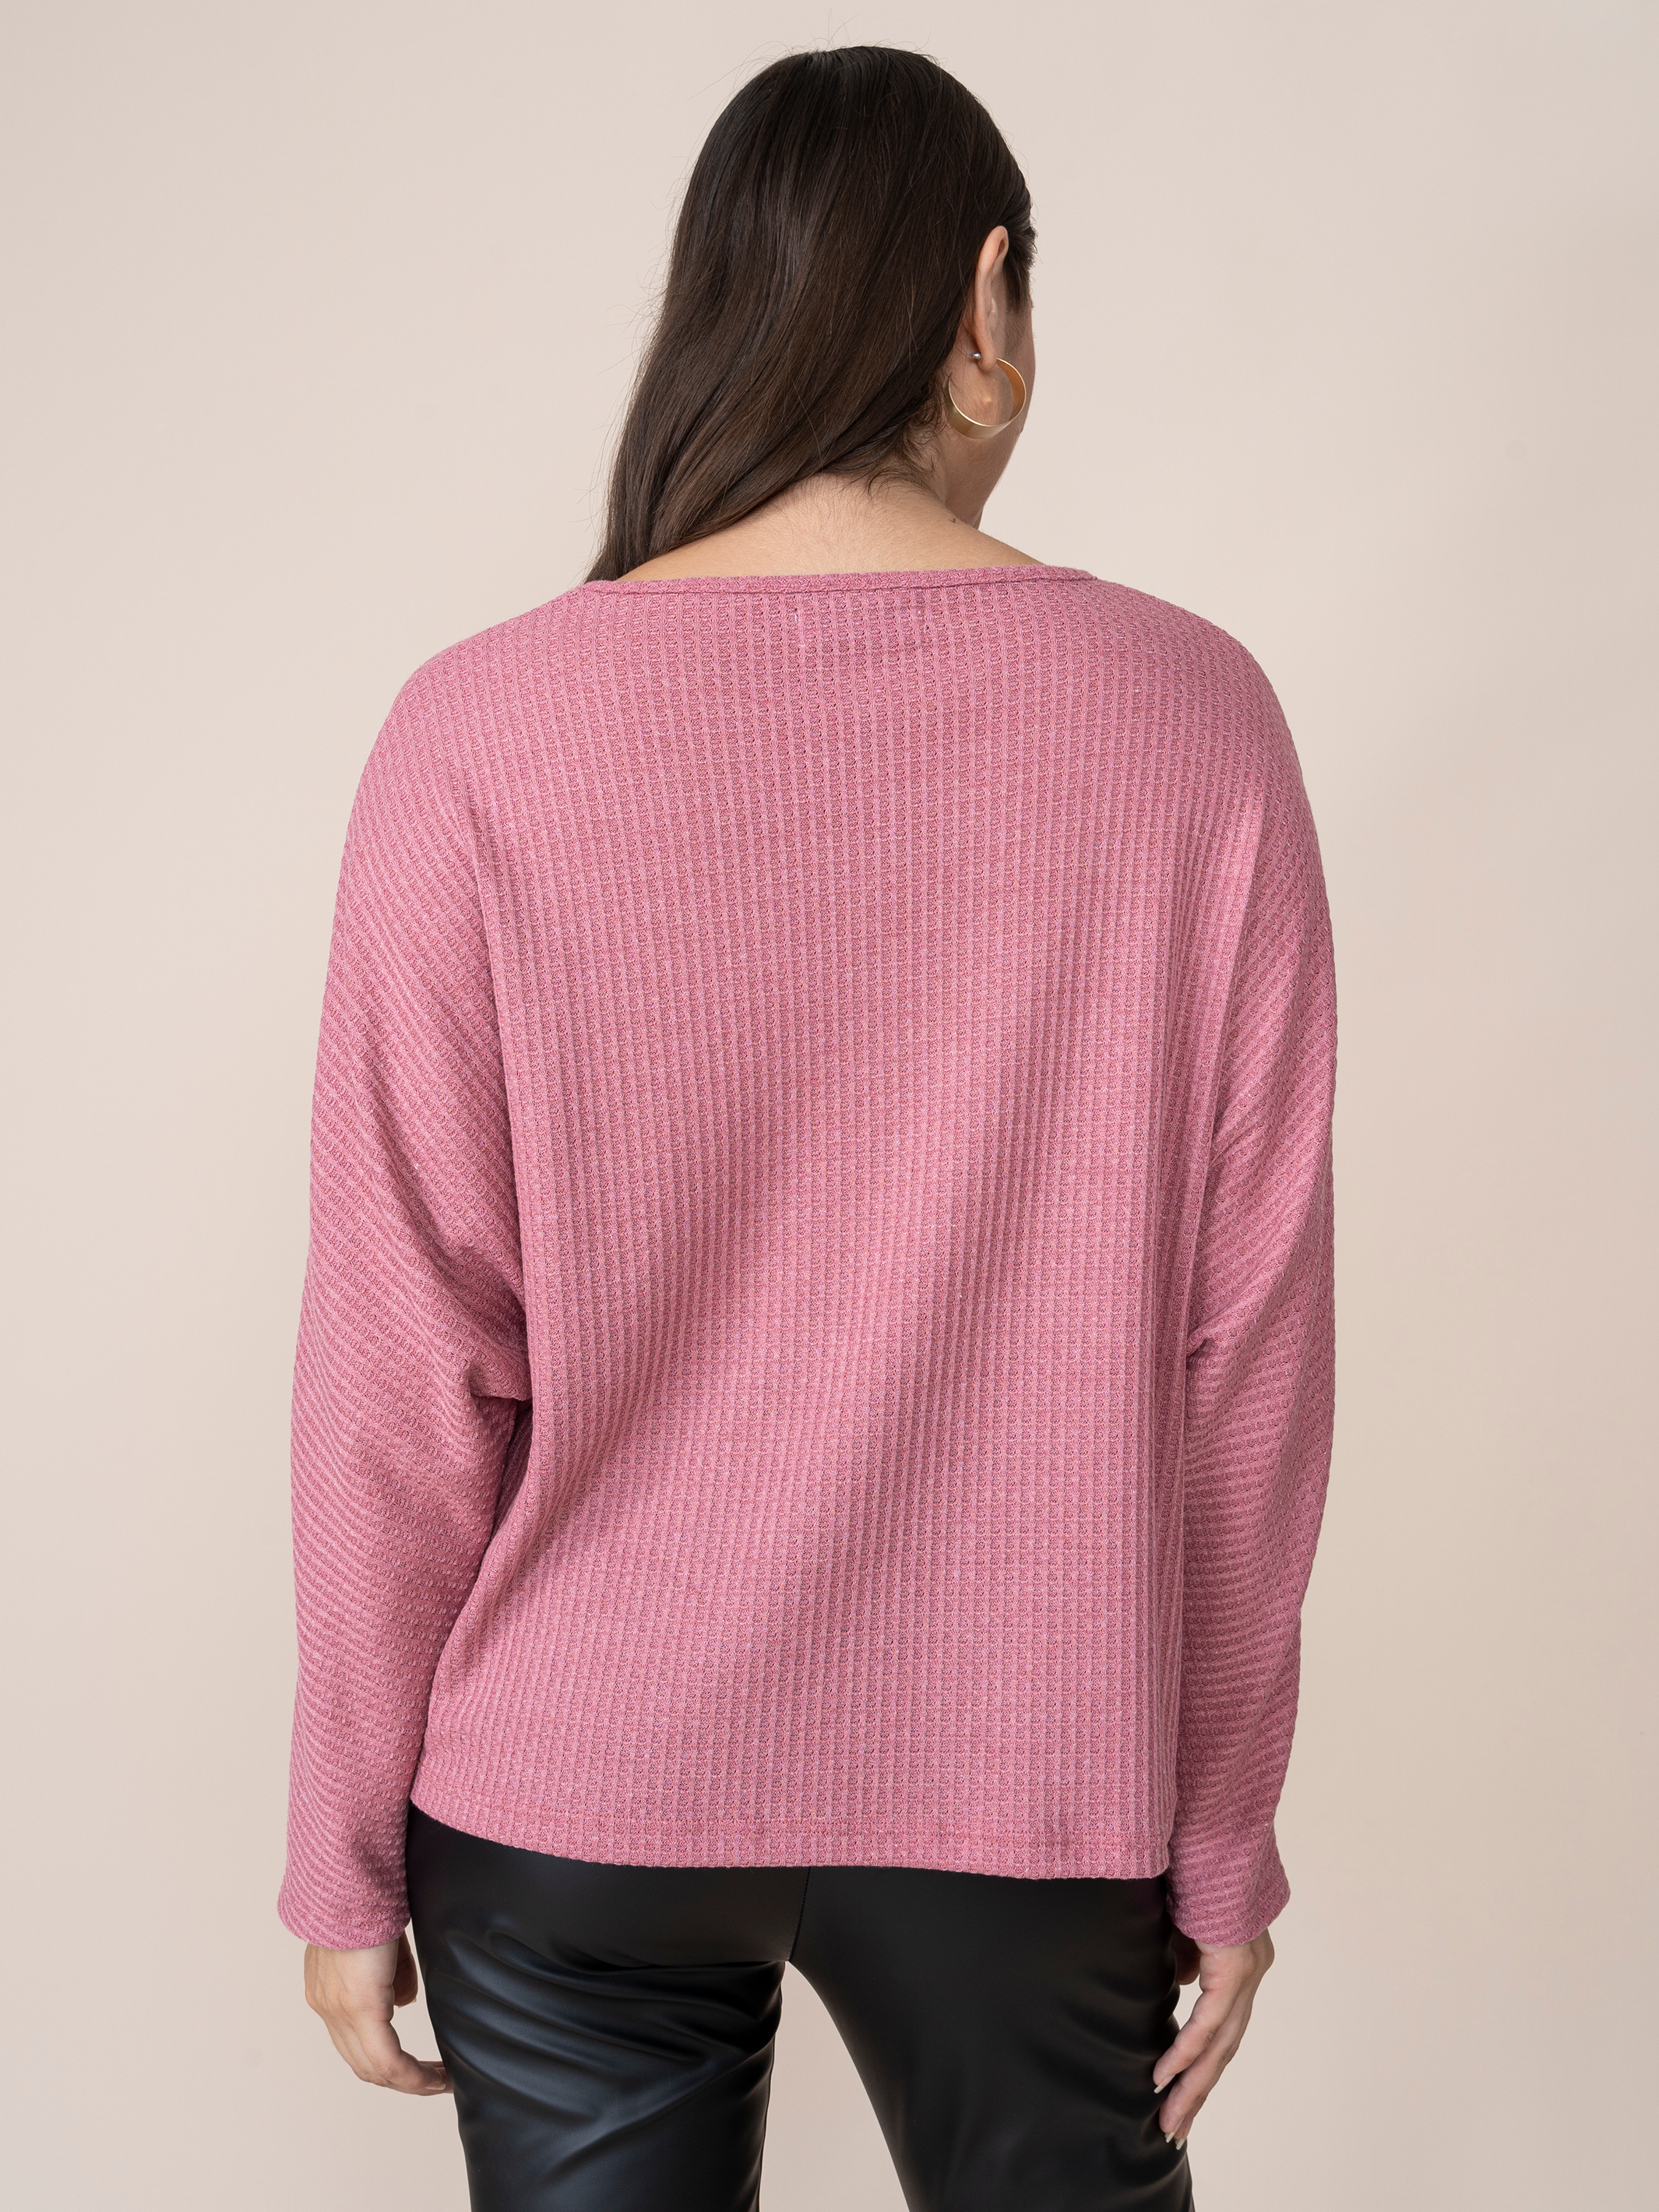 Elena Palo Rosa Sweater